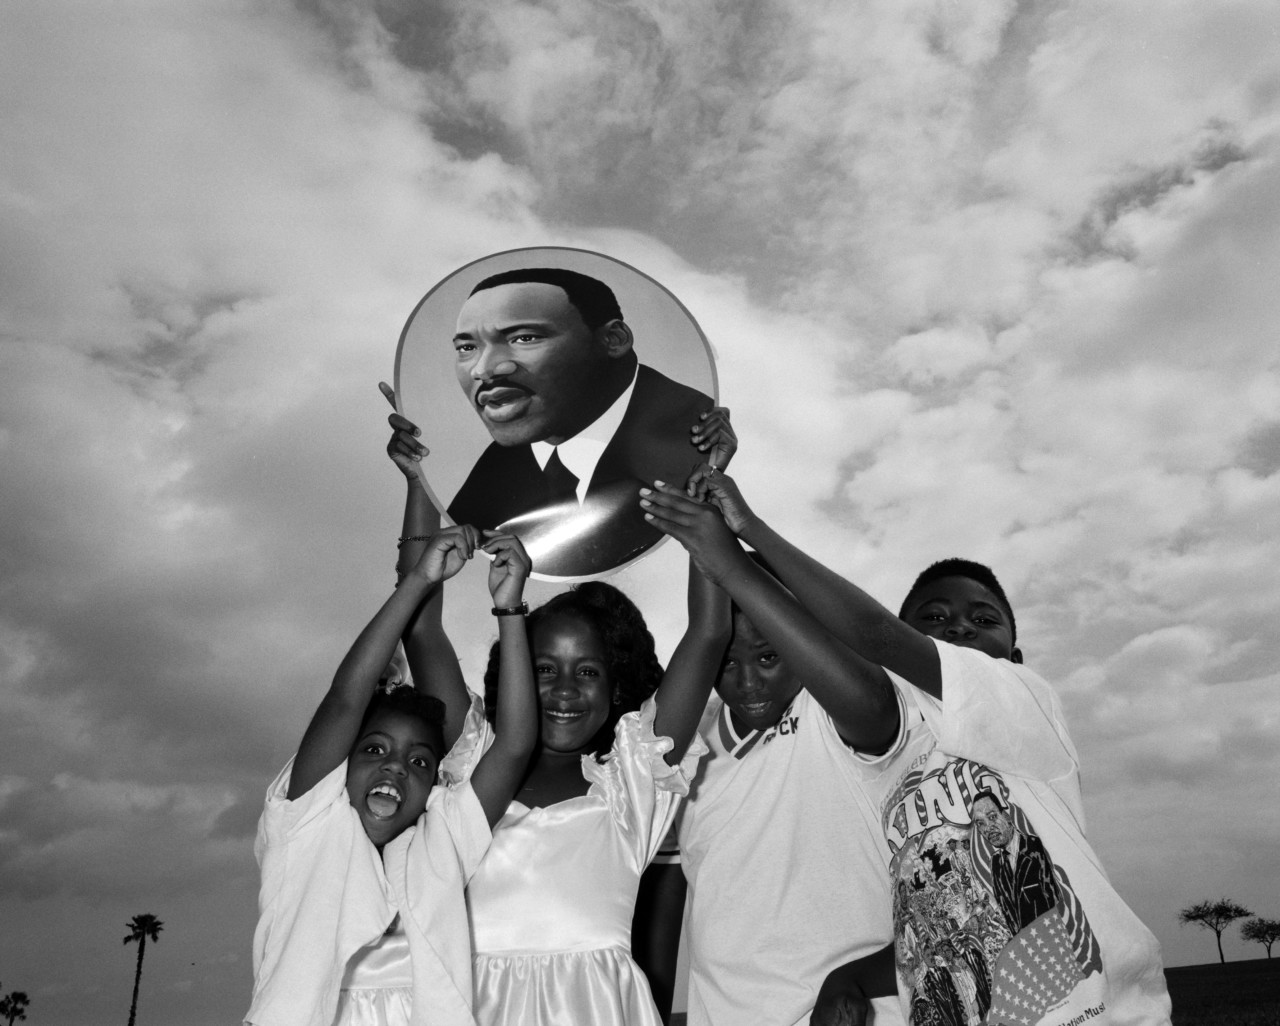 No Looting, No Shooting': The Martin Luther King Jr Myth and